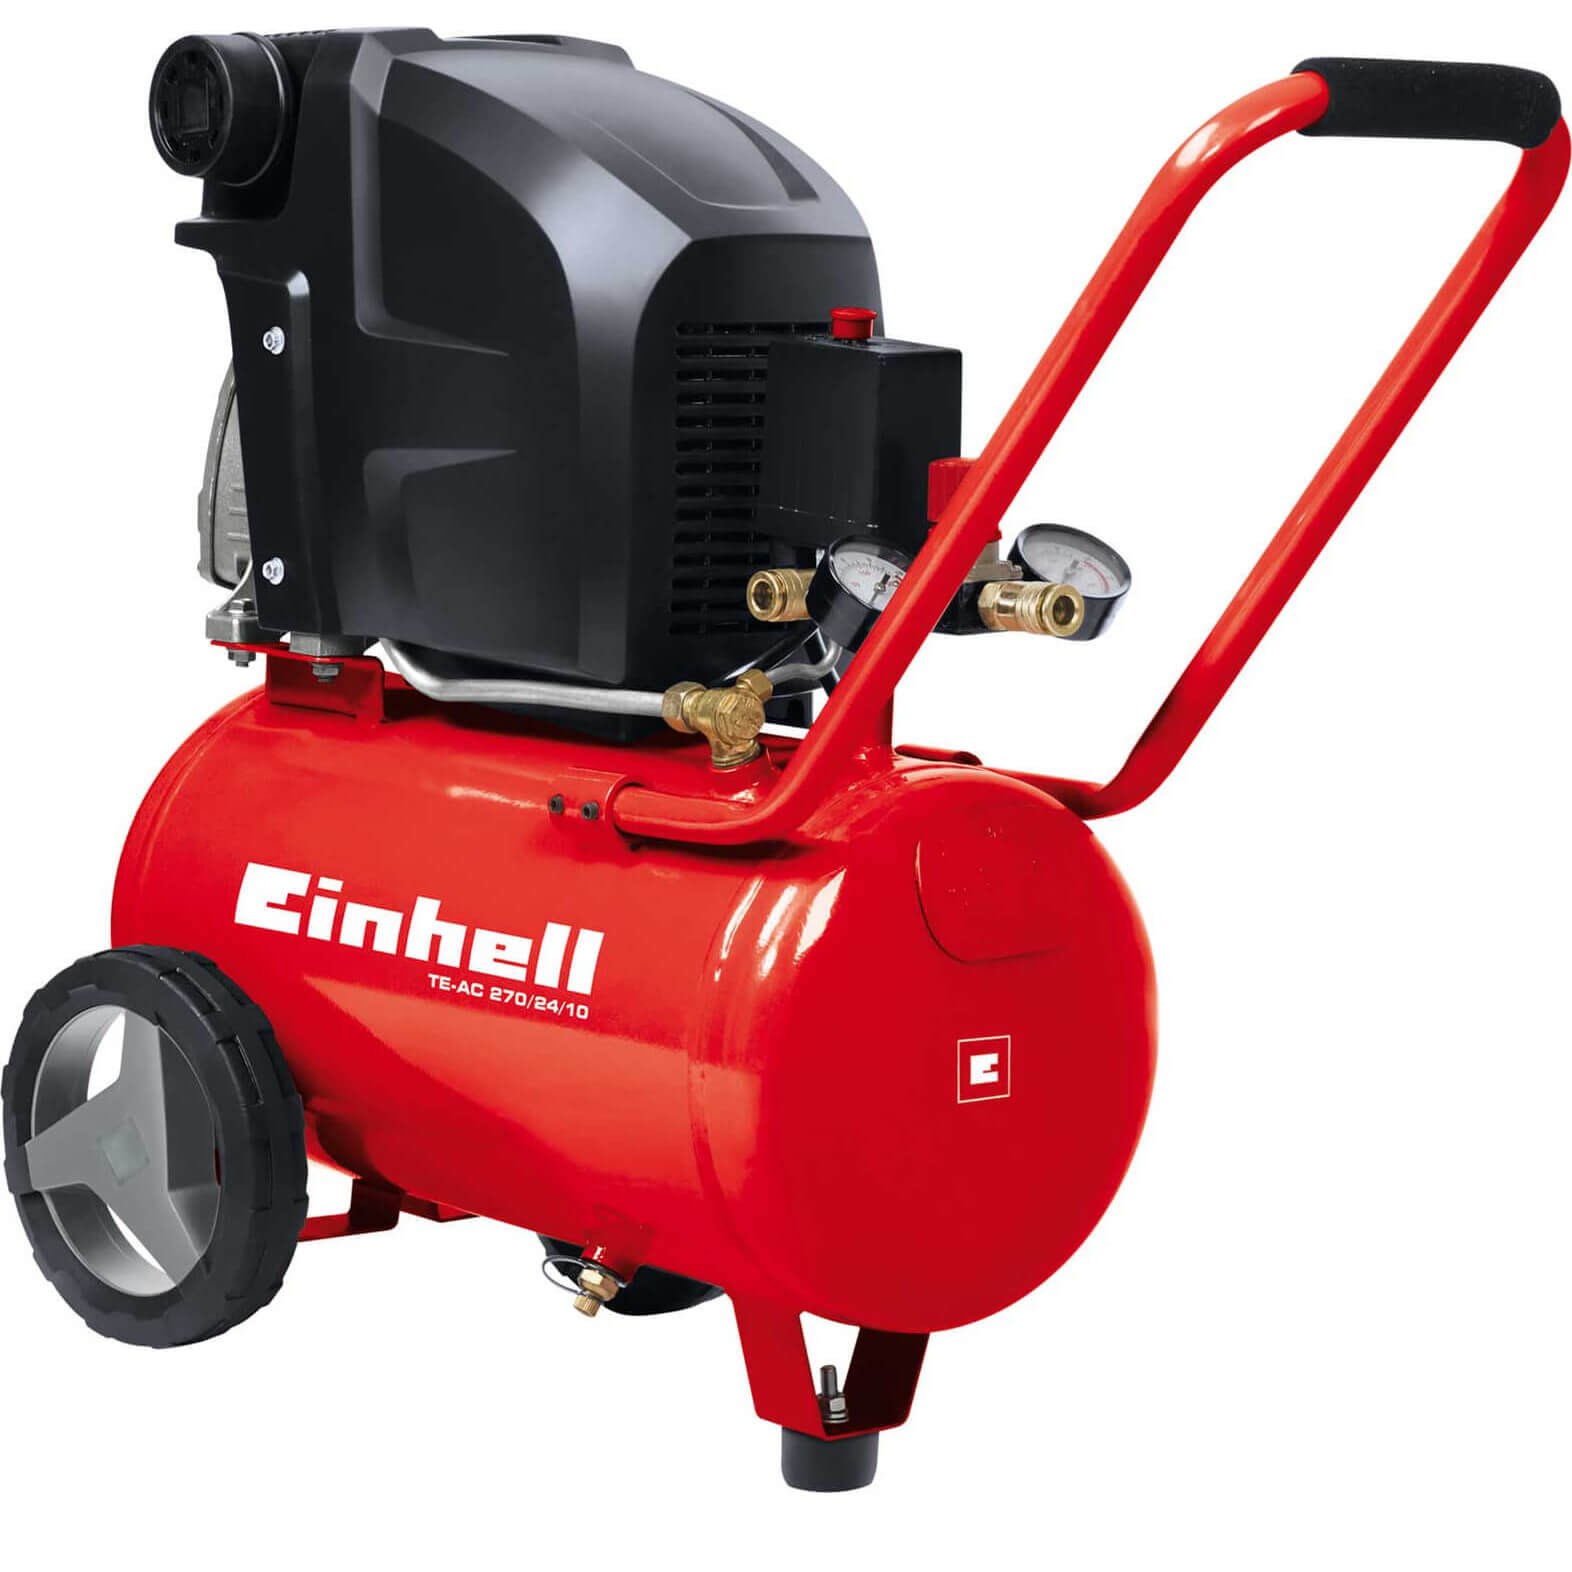 Einhell TE-AC Air 24 270/24/10 Air Compressor | Litre Compressors